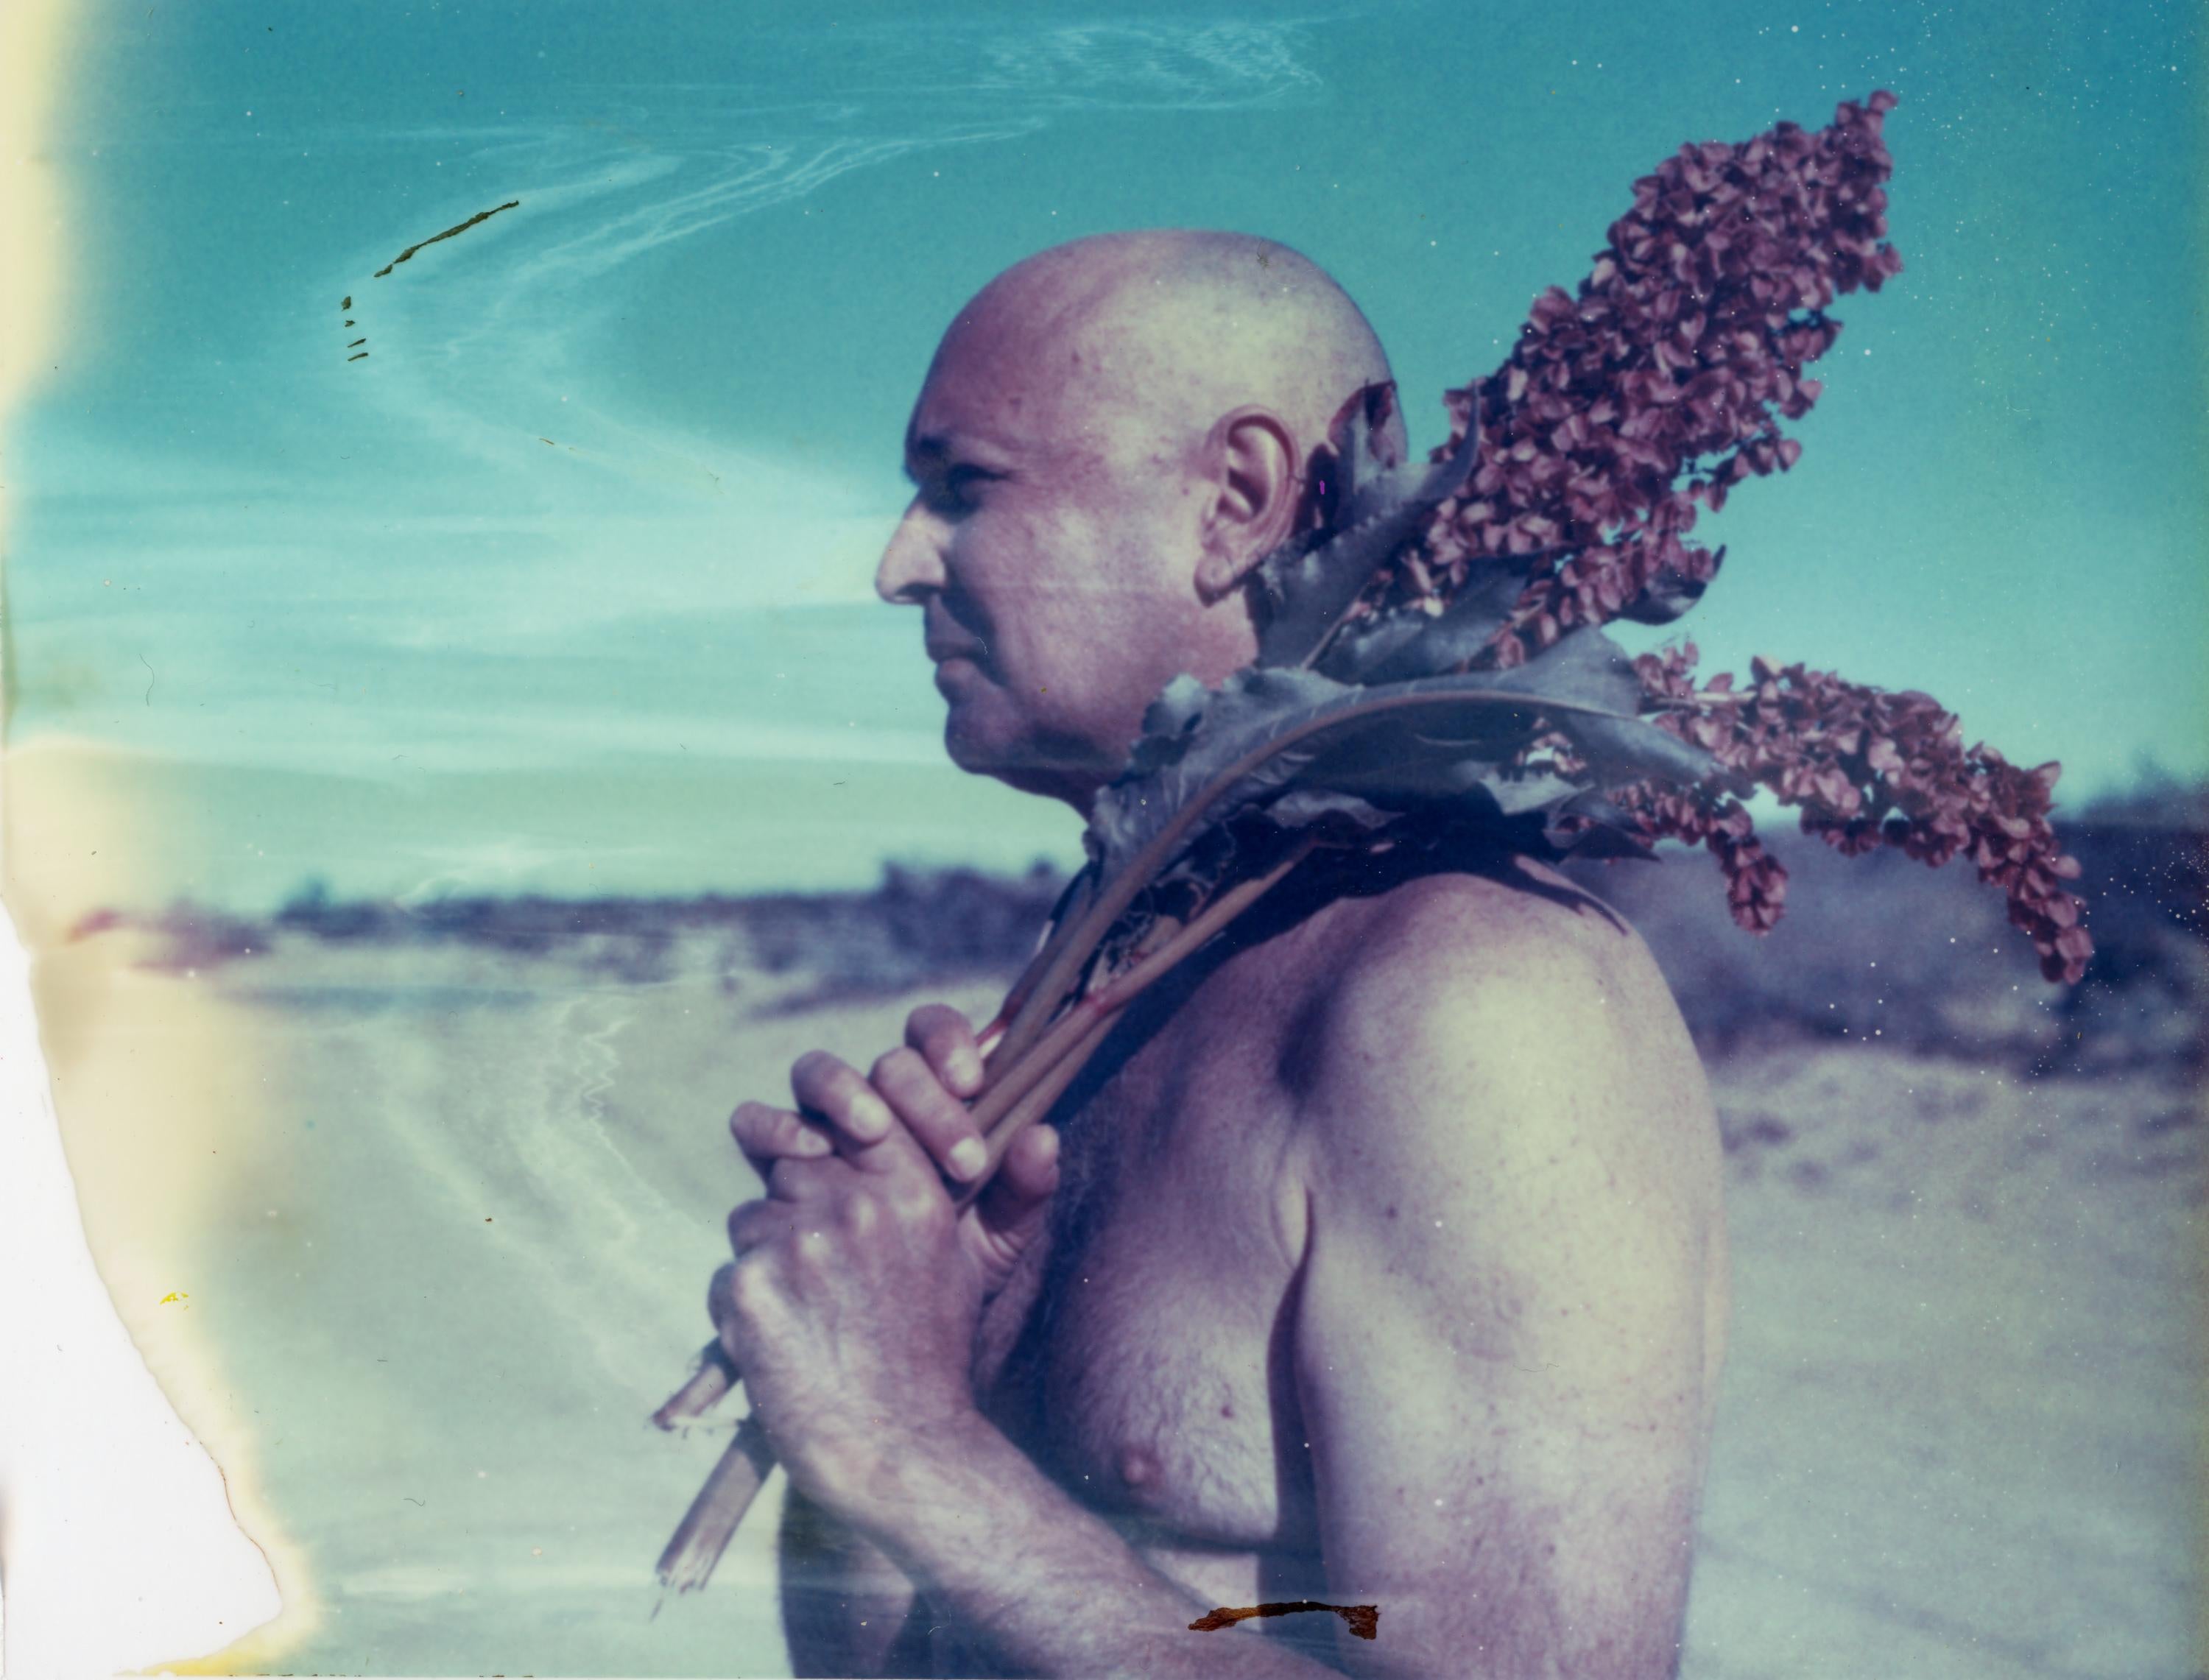 Kirsten Thys van den Audenaerde Portrait Photograph - Desert Visions - Contemporary, Portrait, Men, Polaroid, 21st Century, Nude